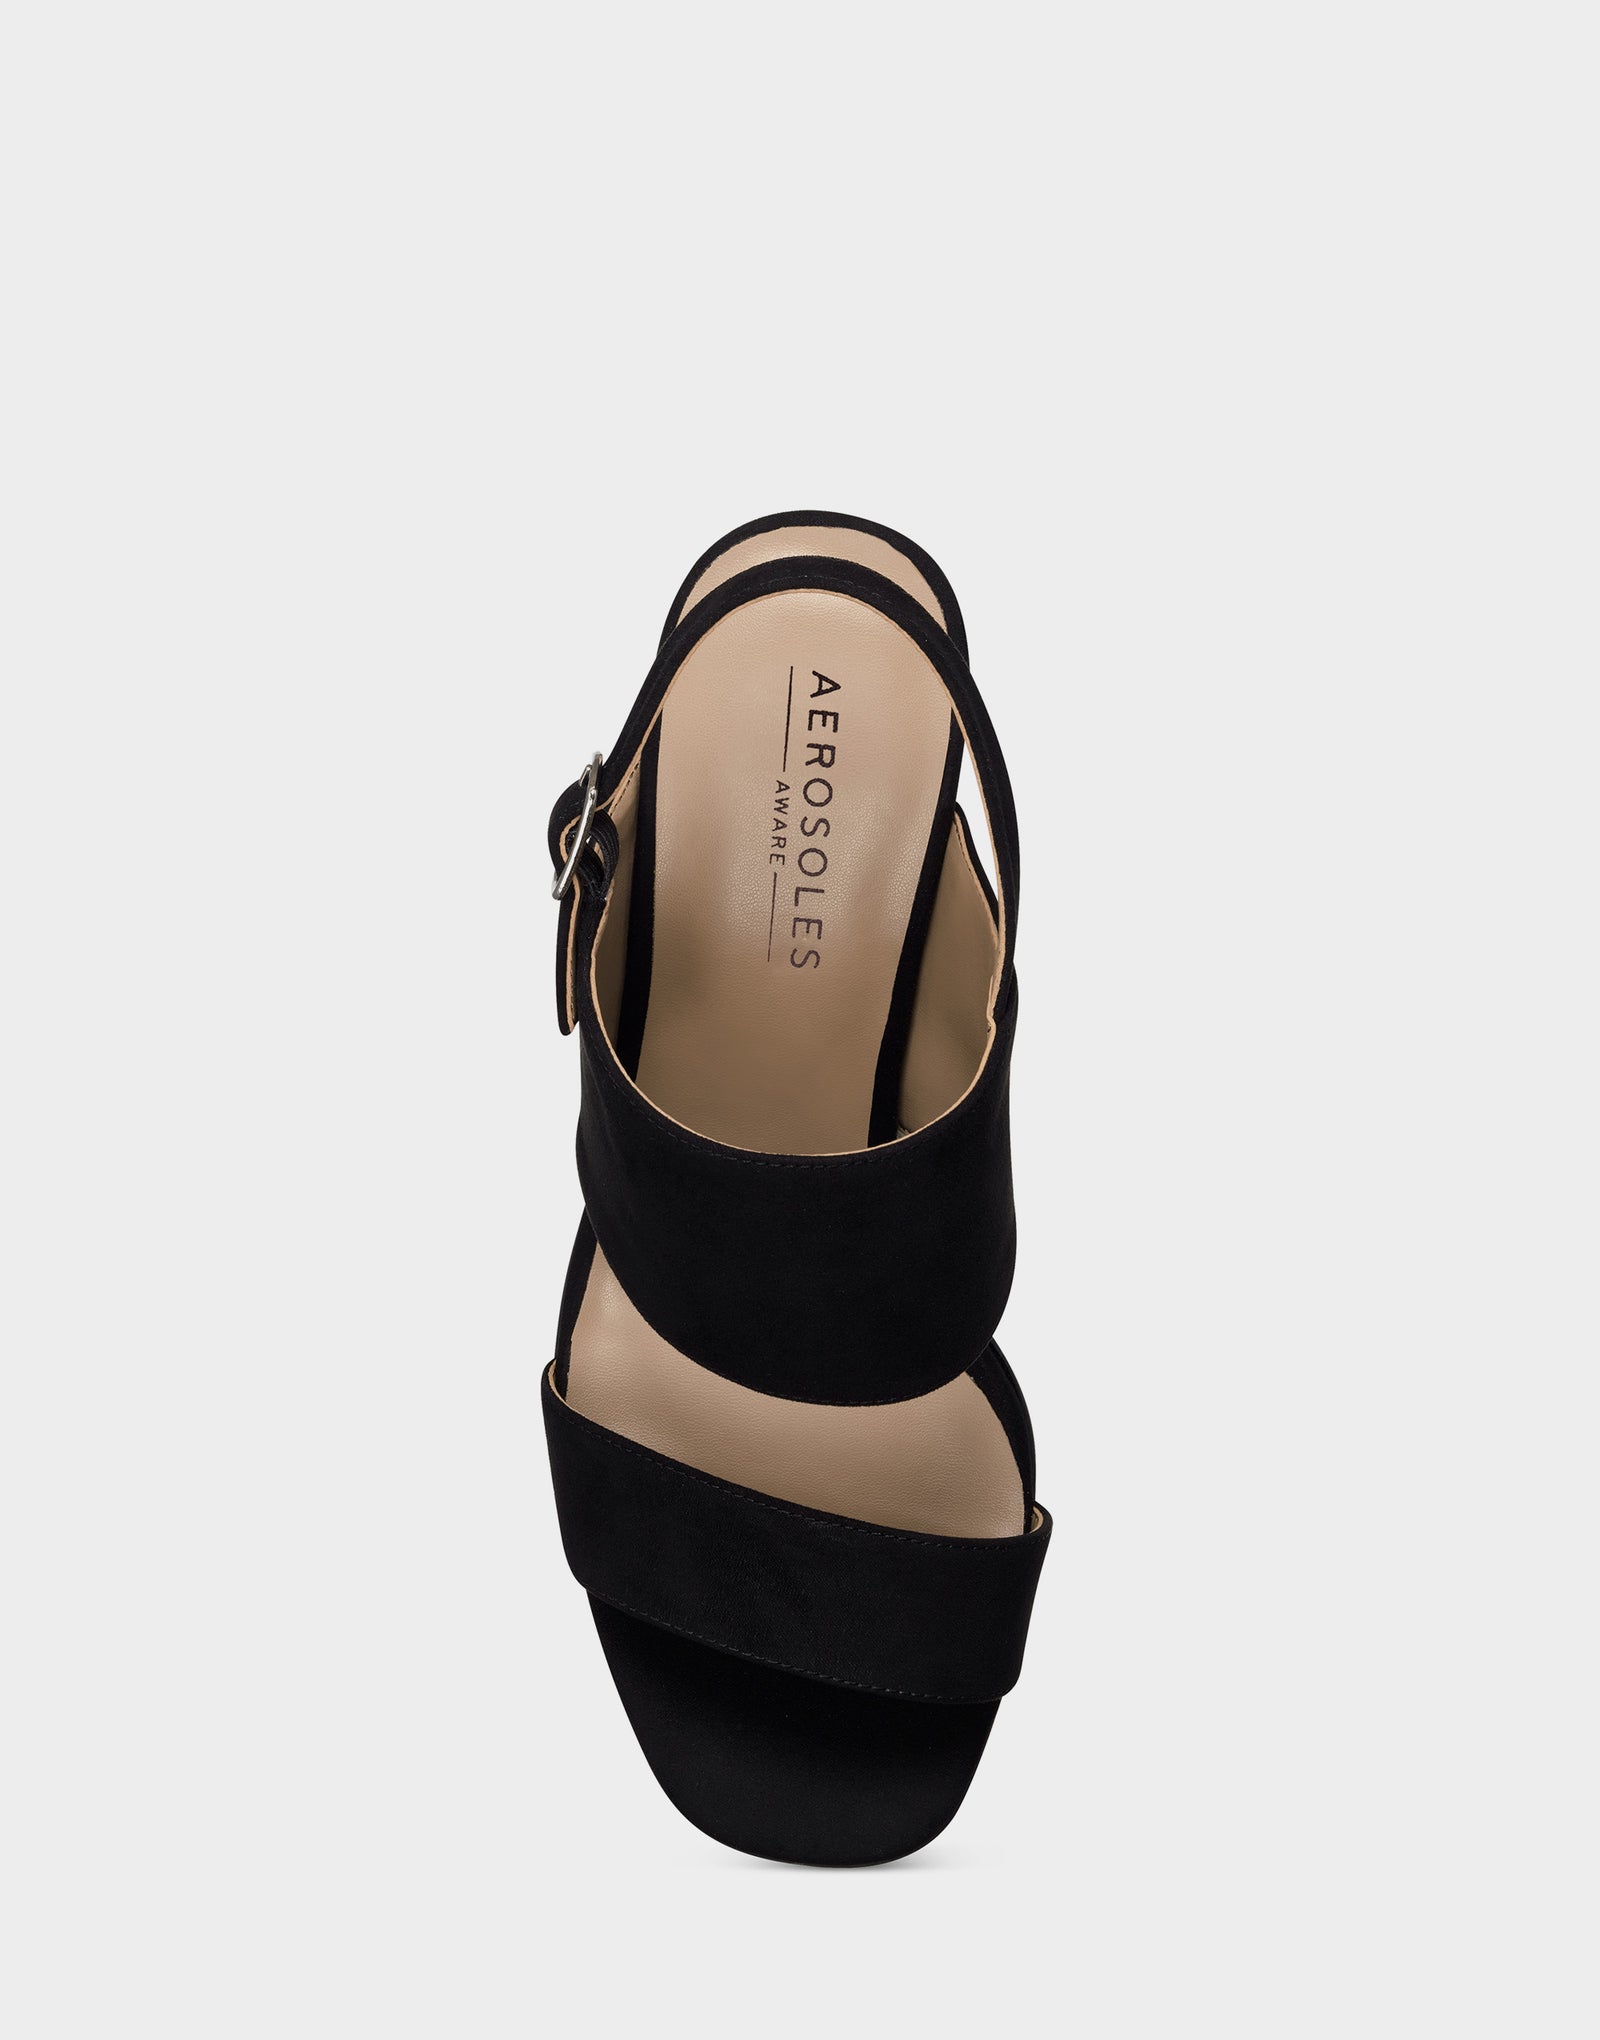 Buy Aerosoles Women's Erie Heeled Sandal, White Leather, 9 W at Amazon.in